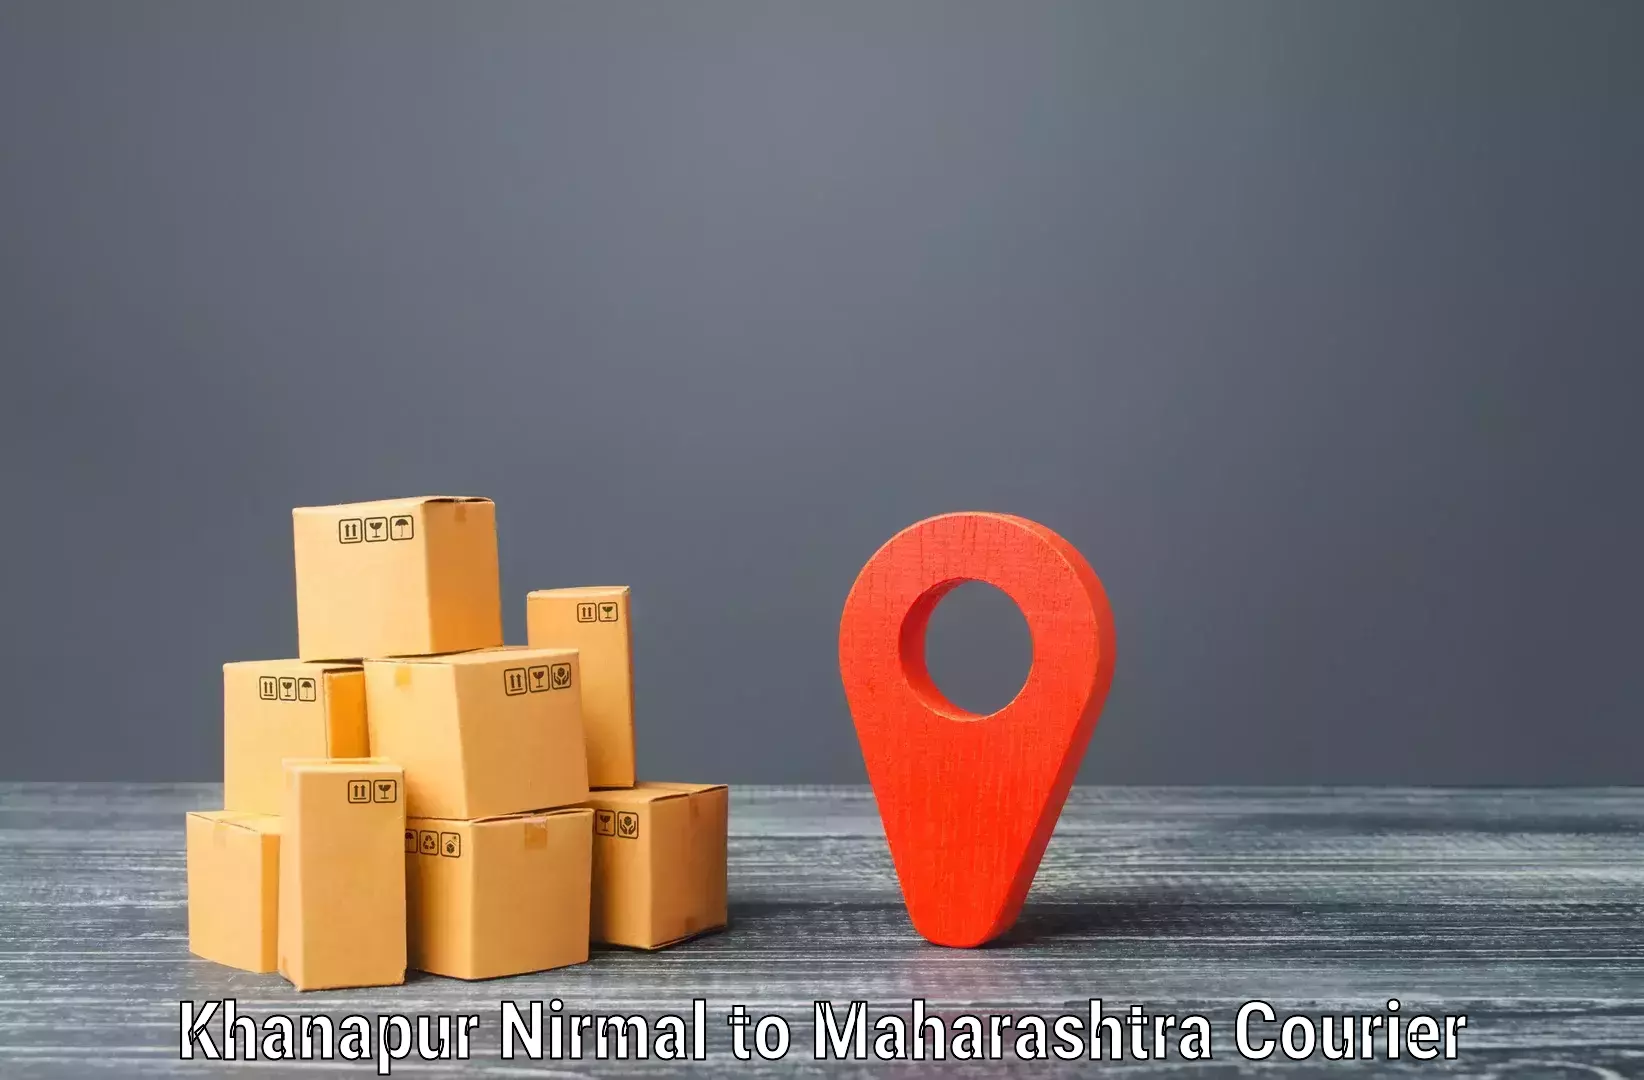 Flexible parcel services in Khanapur Nirmal to Uran Islampur